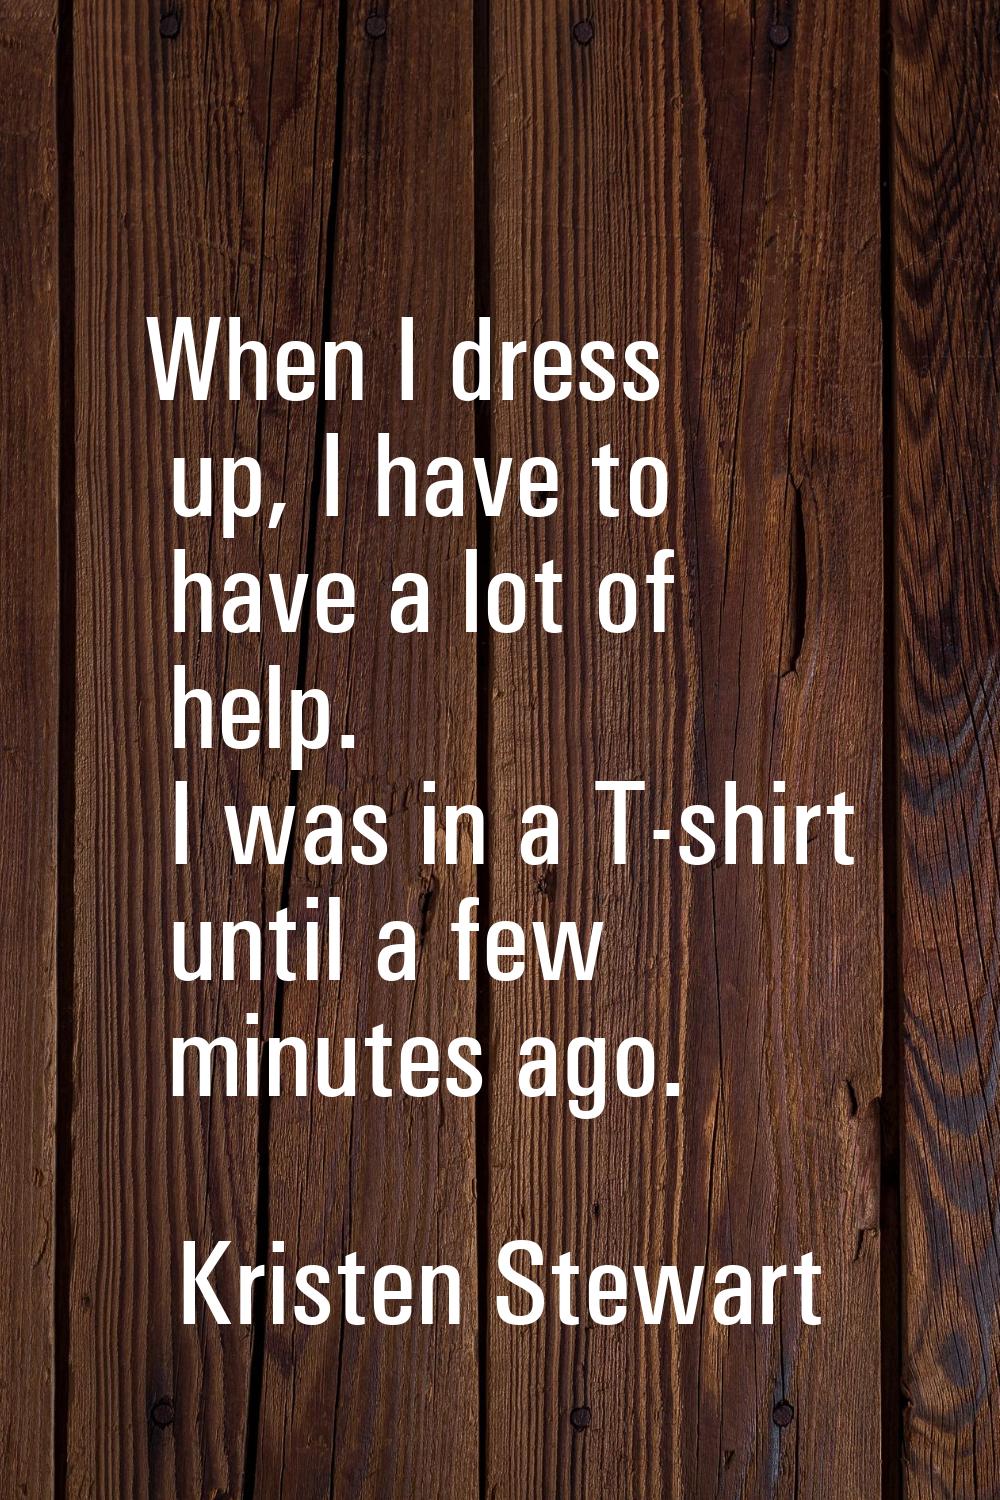 When I dress up, I have to have a lot of help. I was in a T-shirt until a few minutes ago.